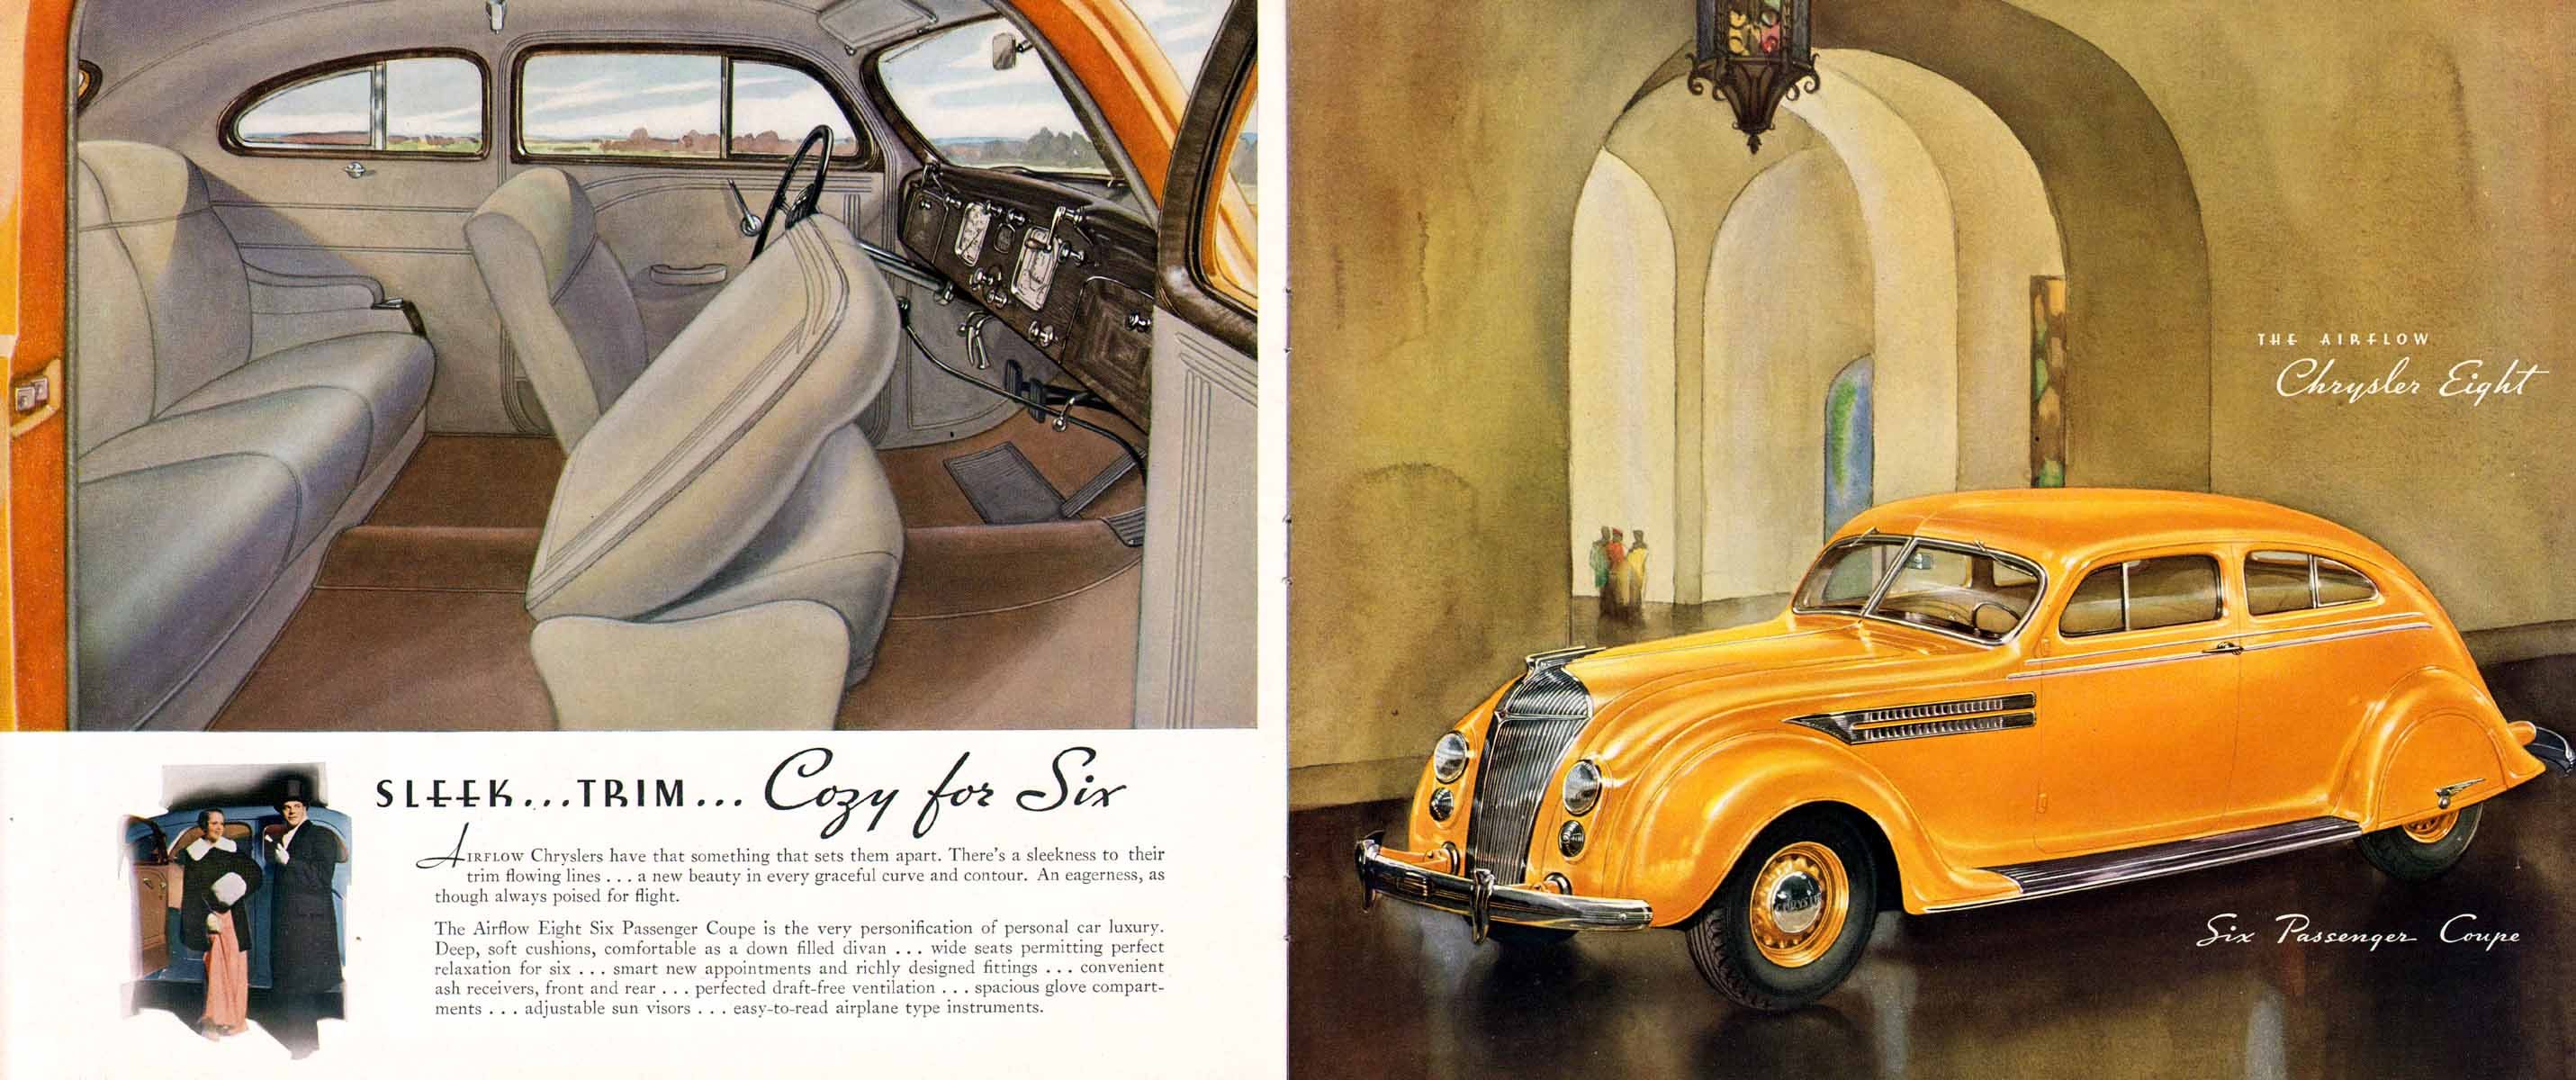 1936_Chrysler_Airflow-12-13